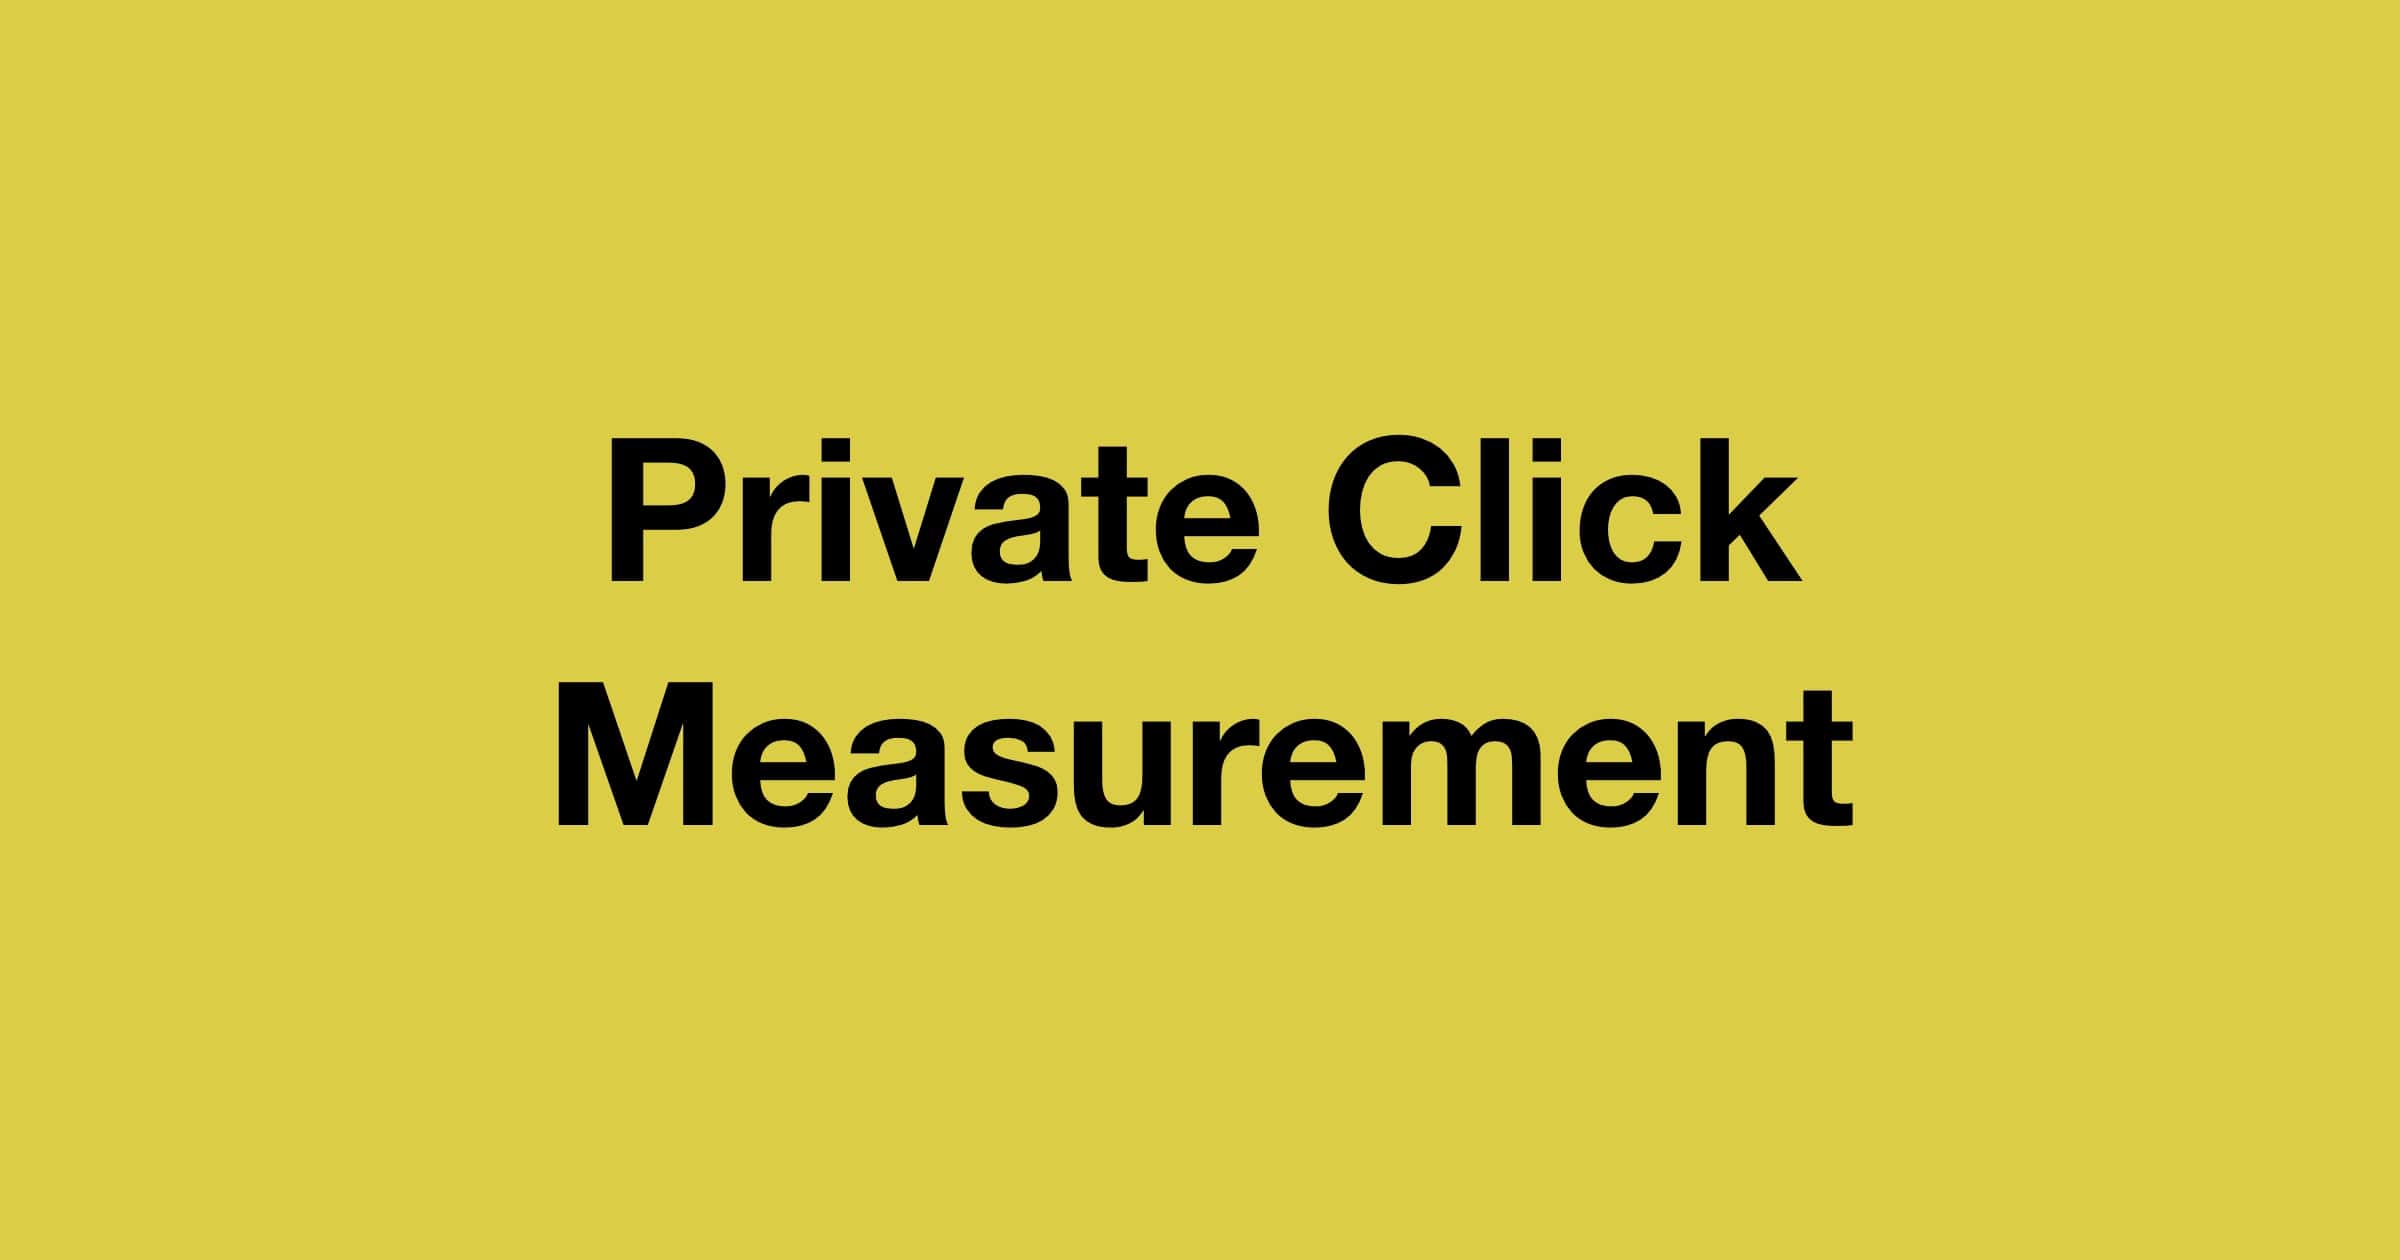 AdGuard: Apple’s Private Click Measurement Isn’t Transparent